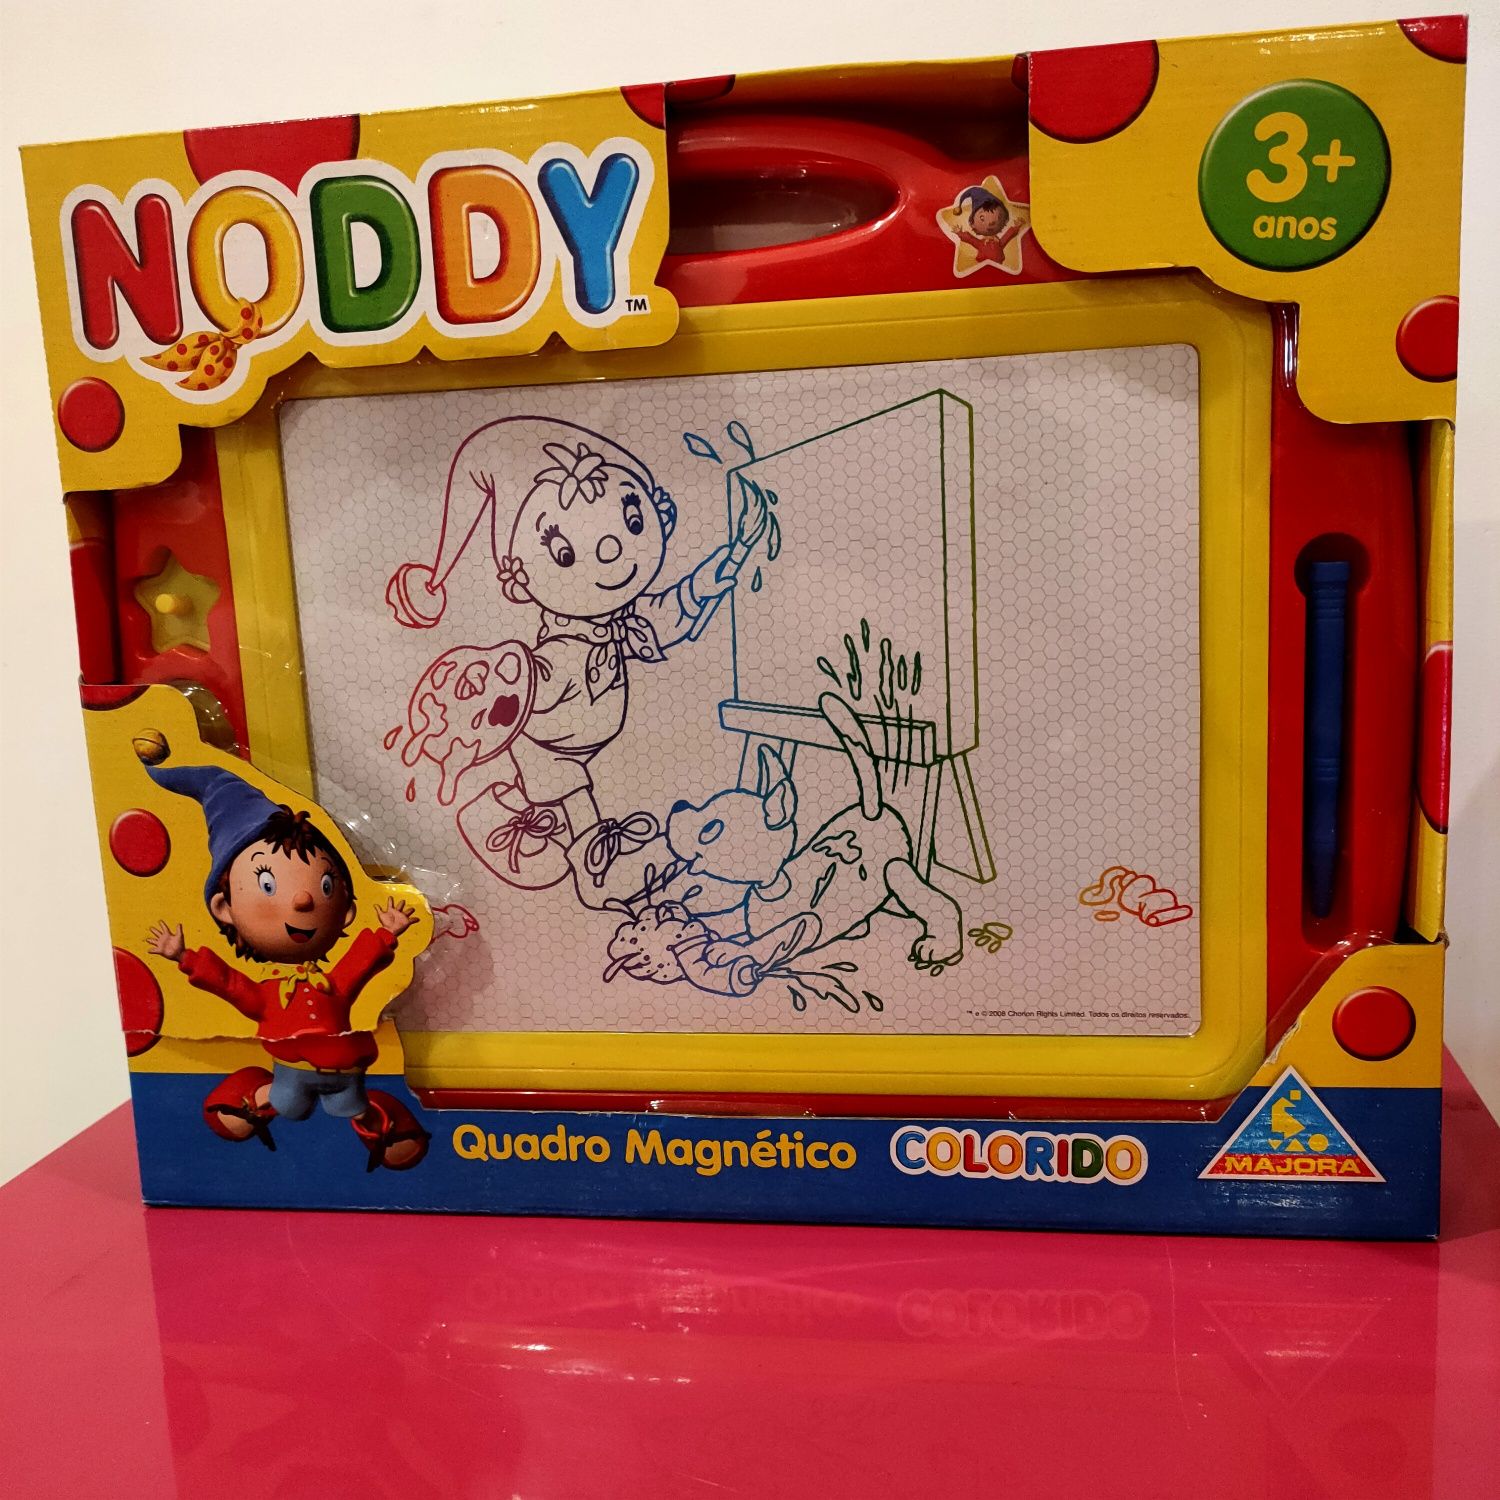 Quadro magnético colorido do Noddy